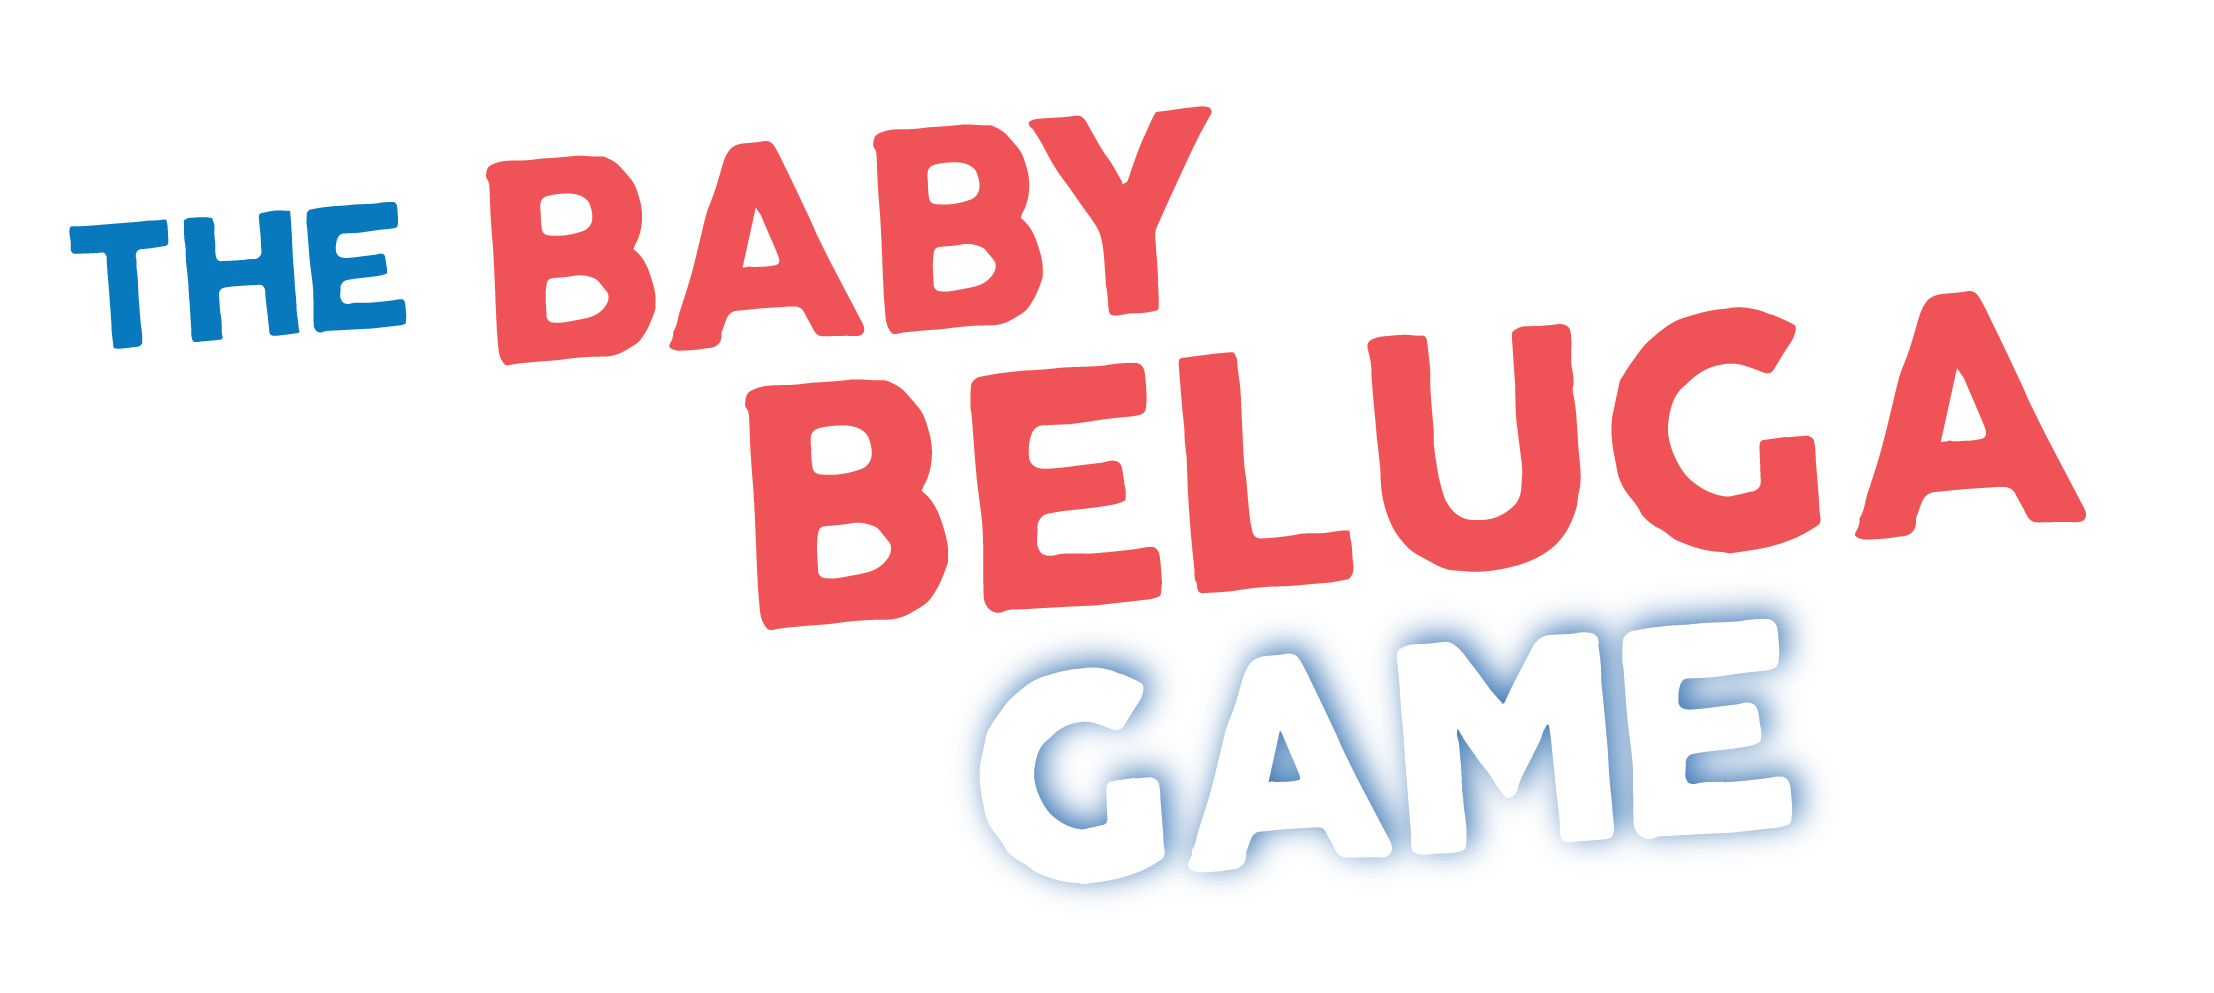 The Baby Beluga Game